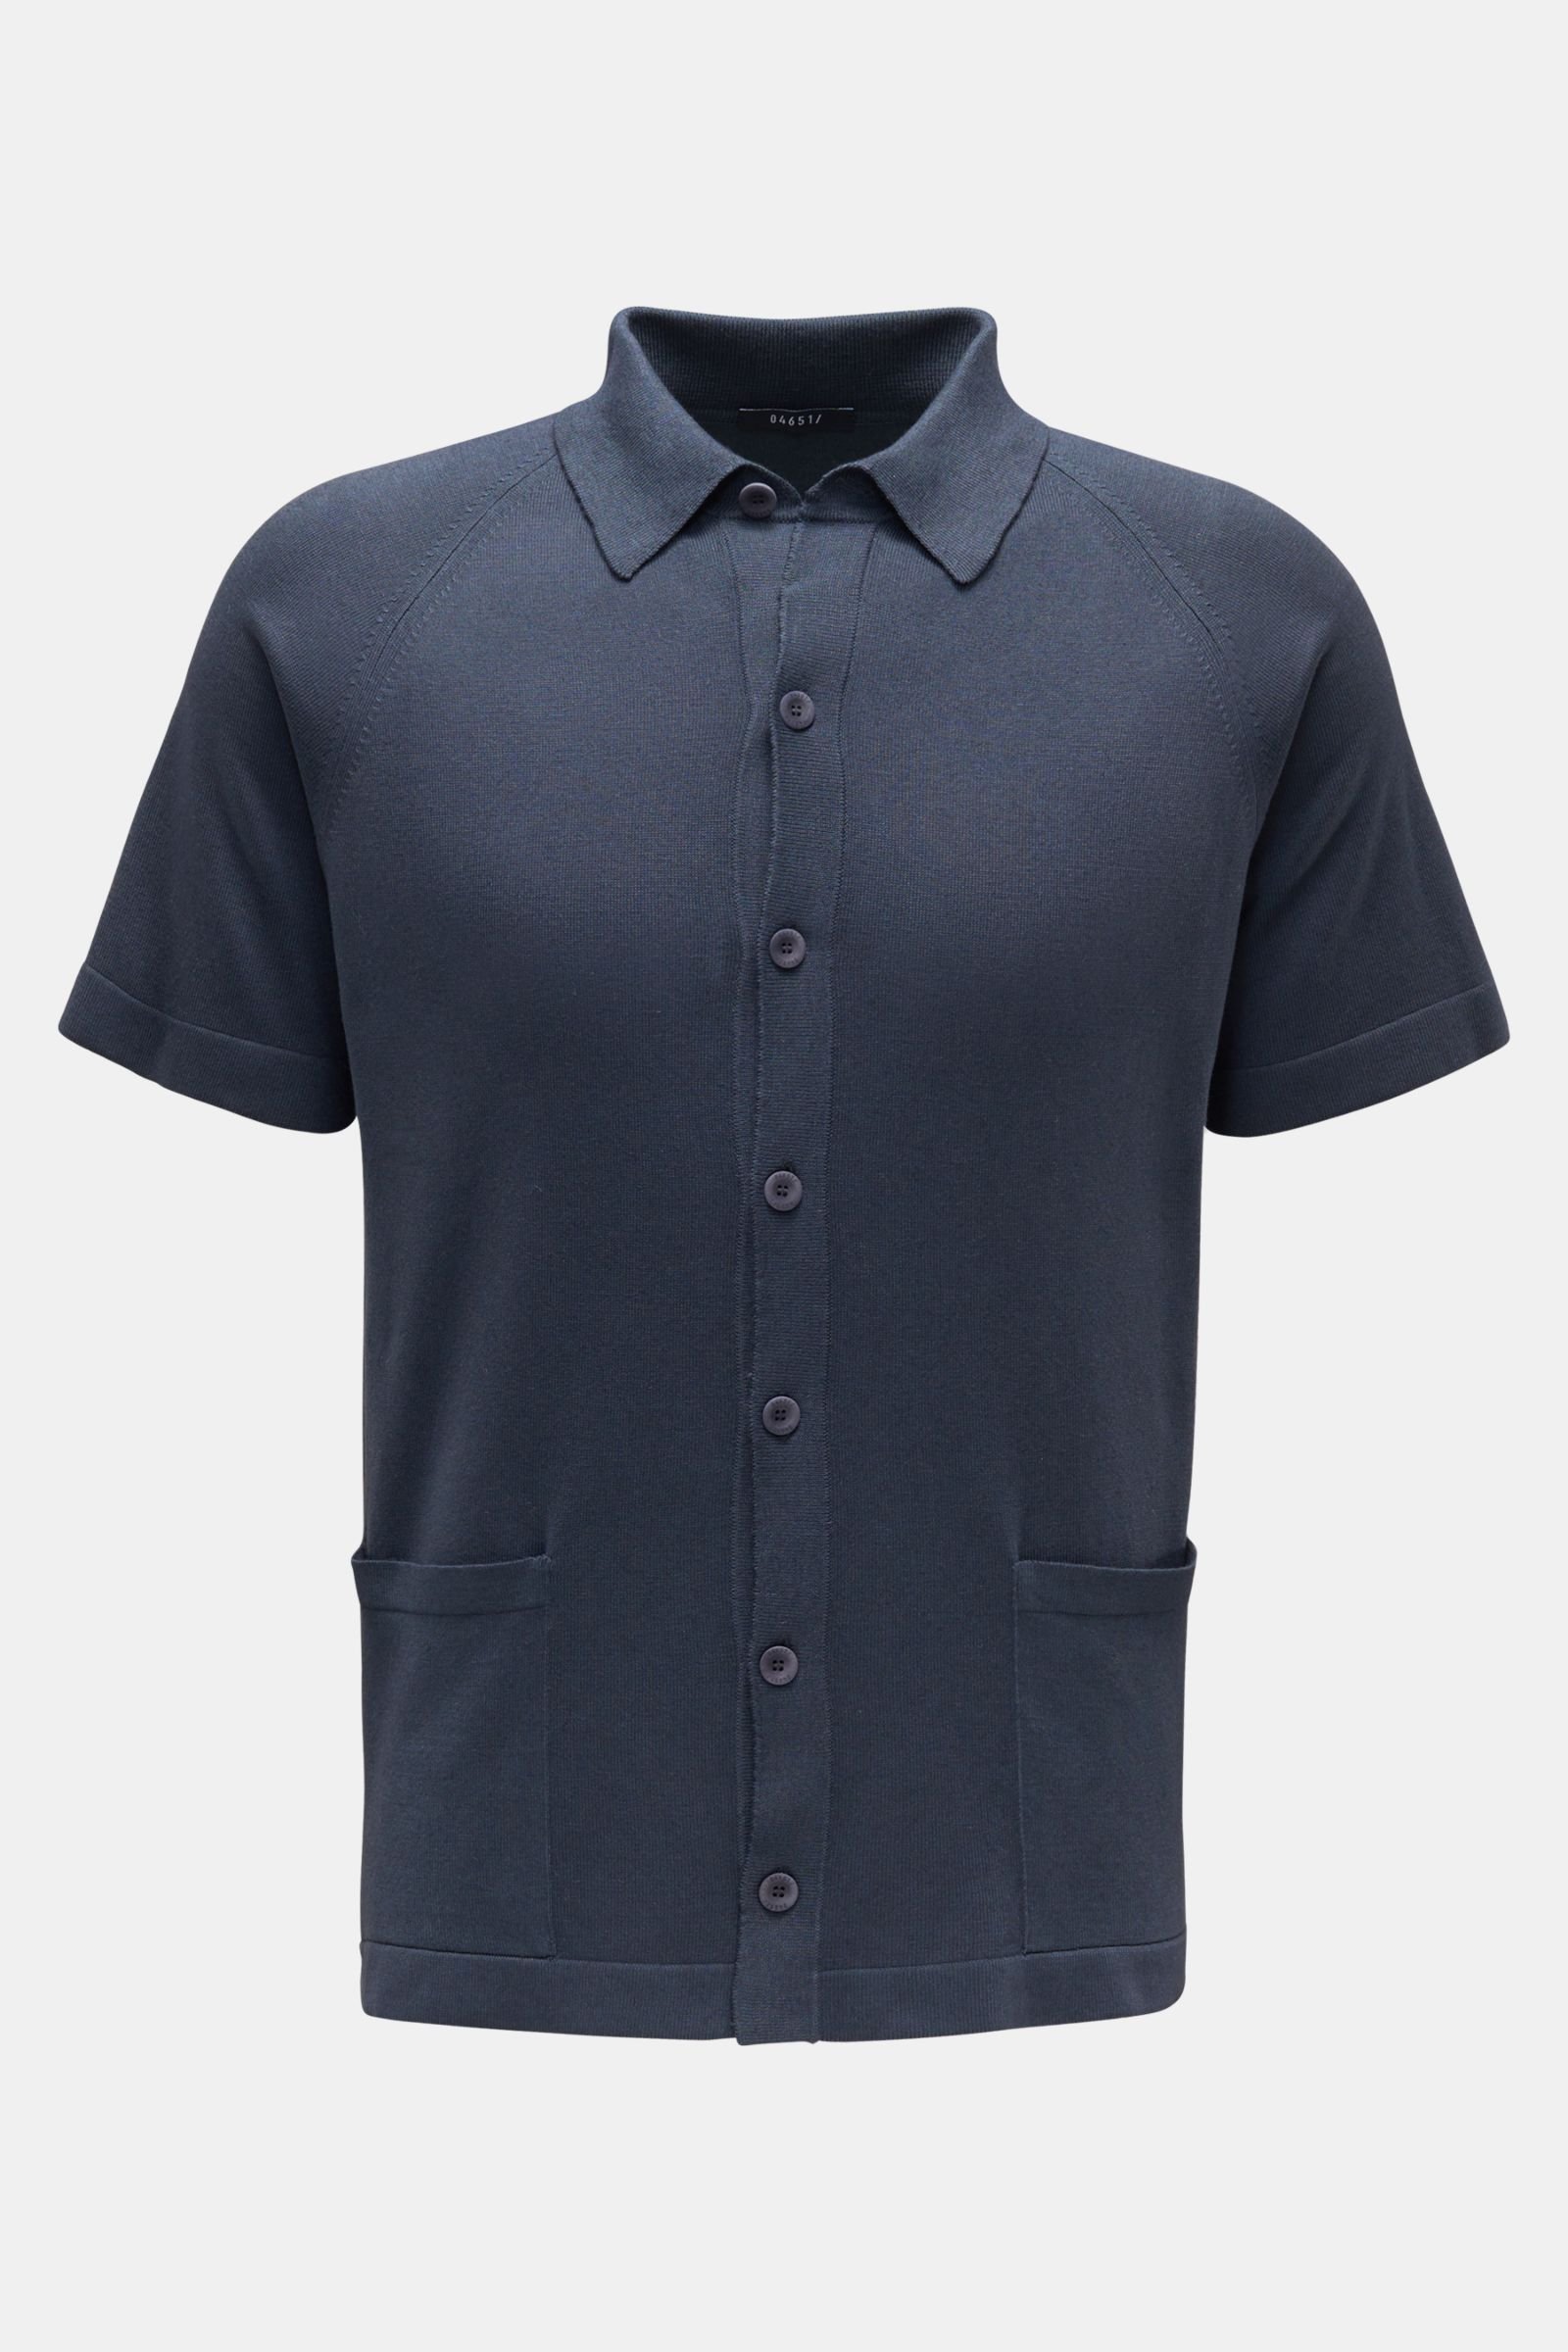 Short sleeve knit shirt 'Foggy Shirt' narrow collar navy